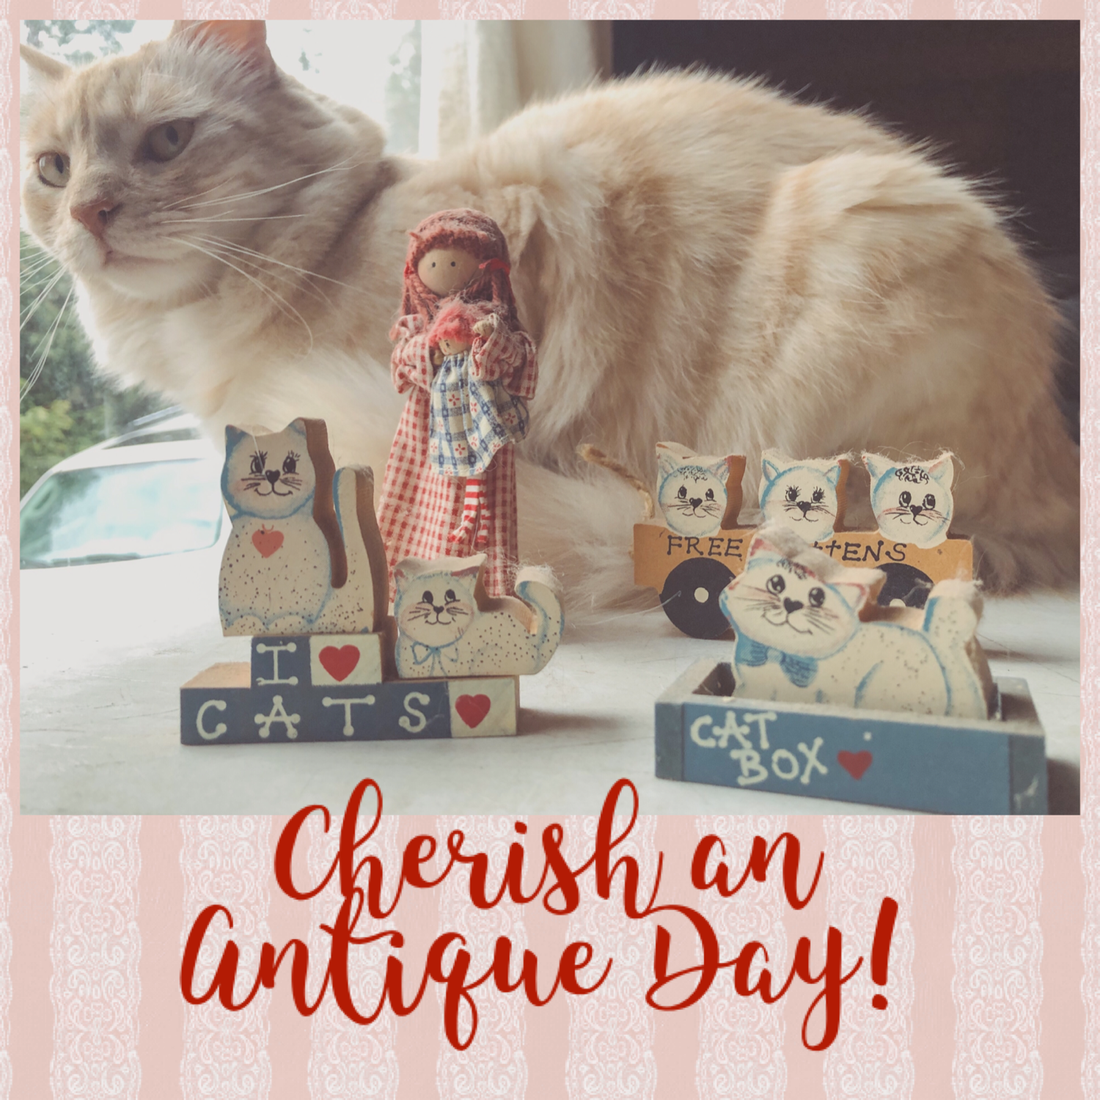 Cherish an Antique Day!